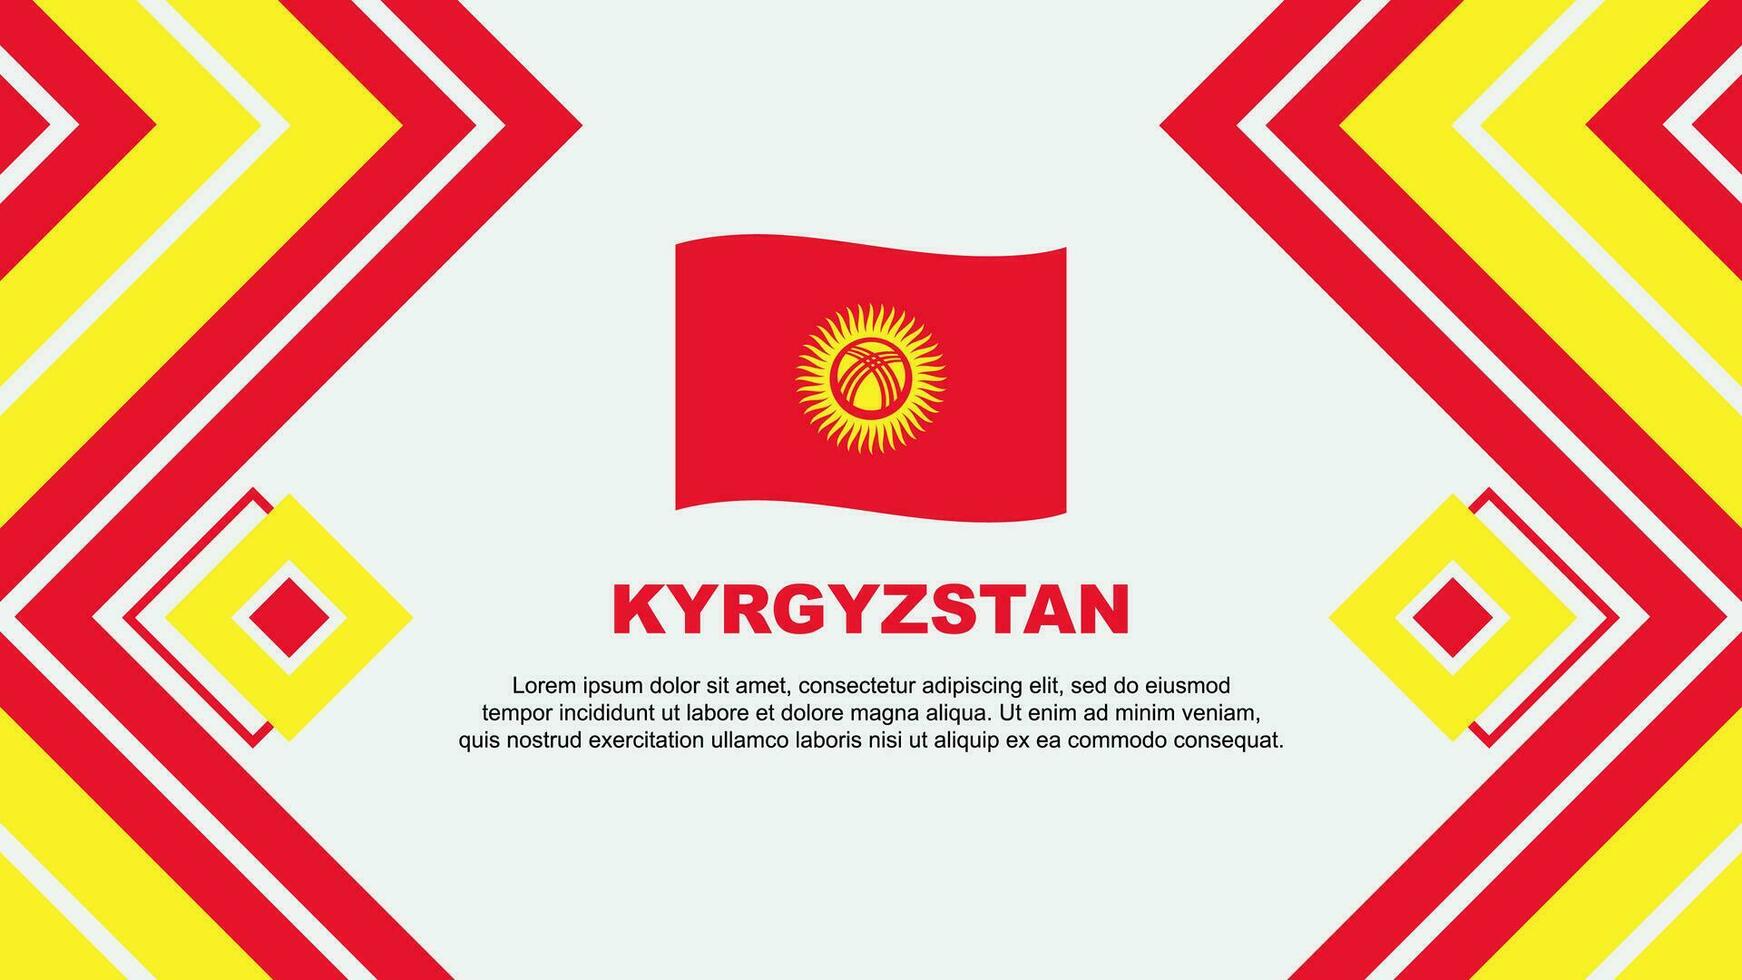 Kyrgyzstan Flag Abstract Background Design Template. Kyrgyzstan Independence Day Banner Wallpaper Vector Illustration. Kyrgyzstan Design